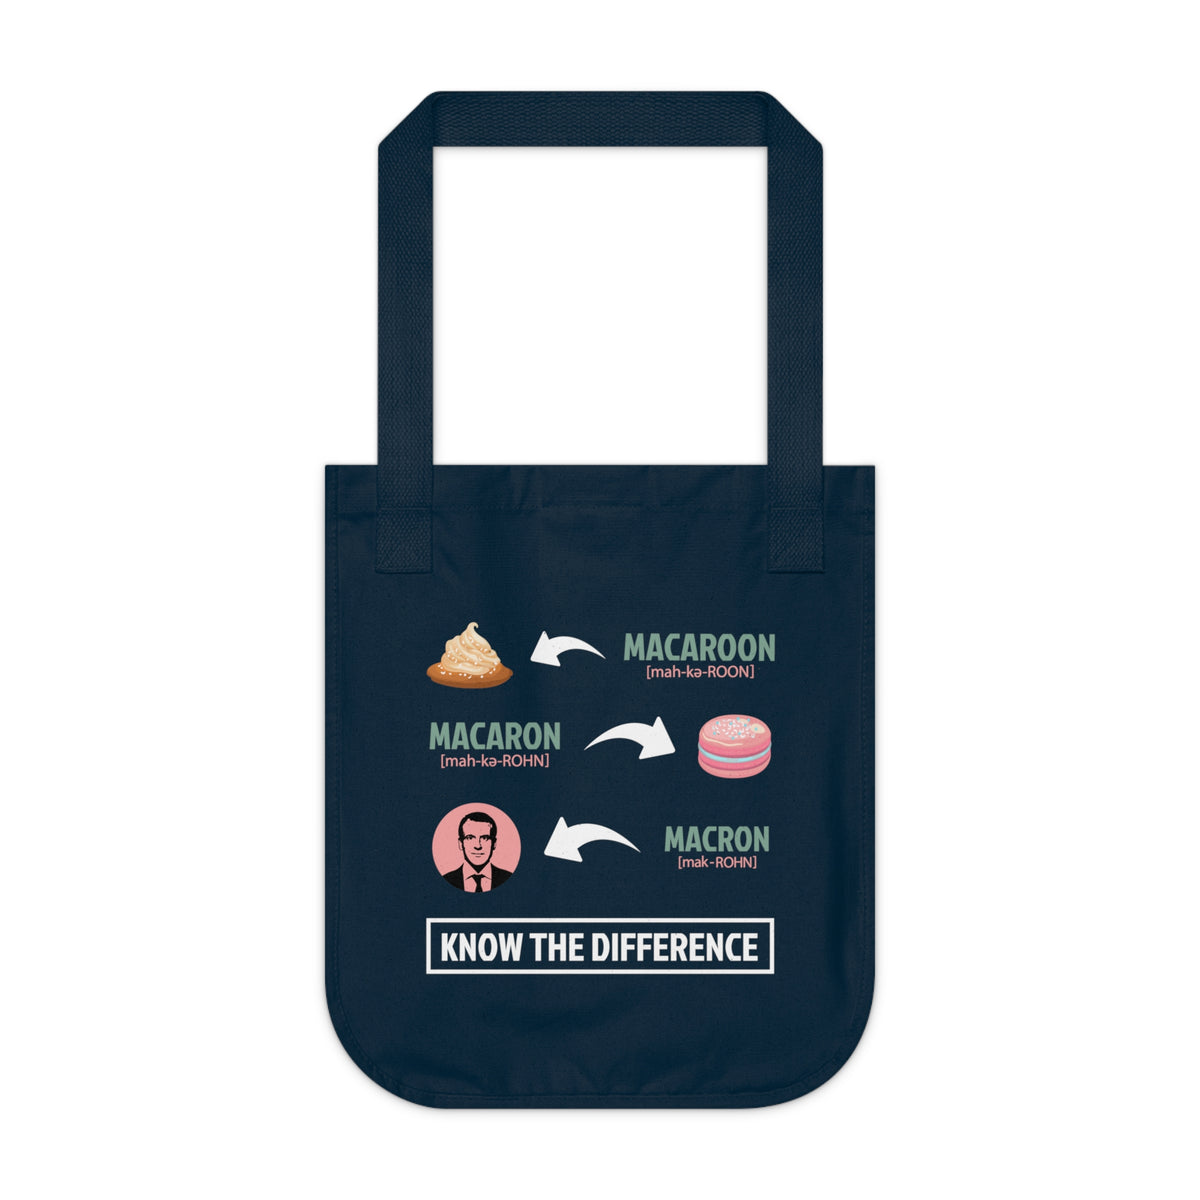 Macaron Macaroon Macron Funny Tote Bag | Cookie Baking Gift | Organic Canvas Tote Bag